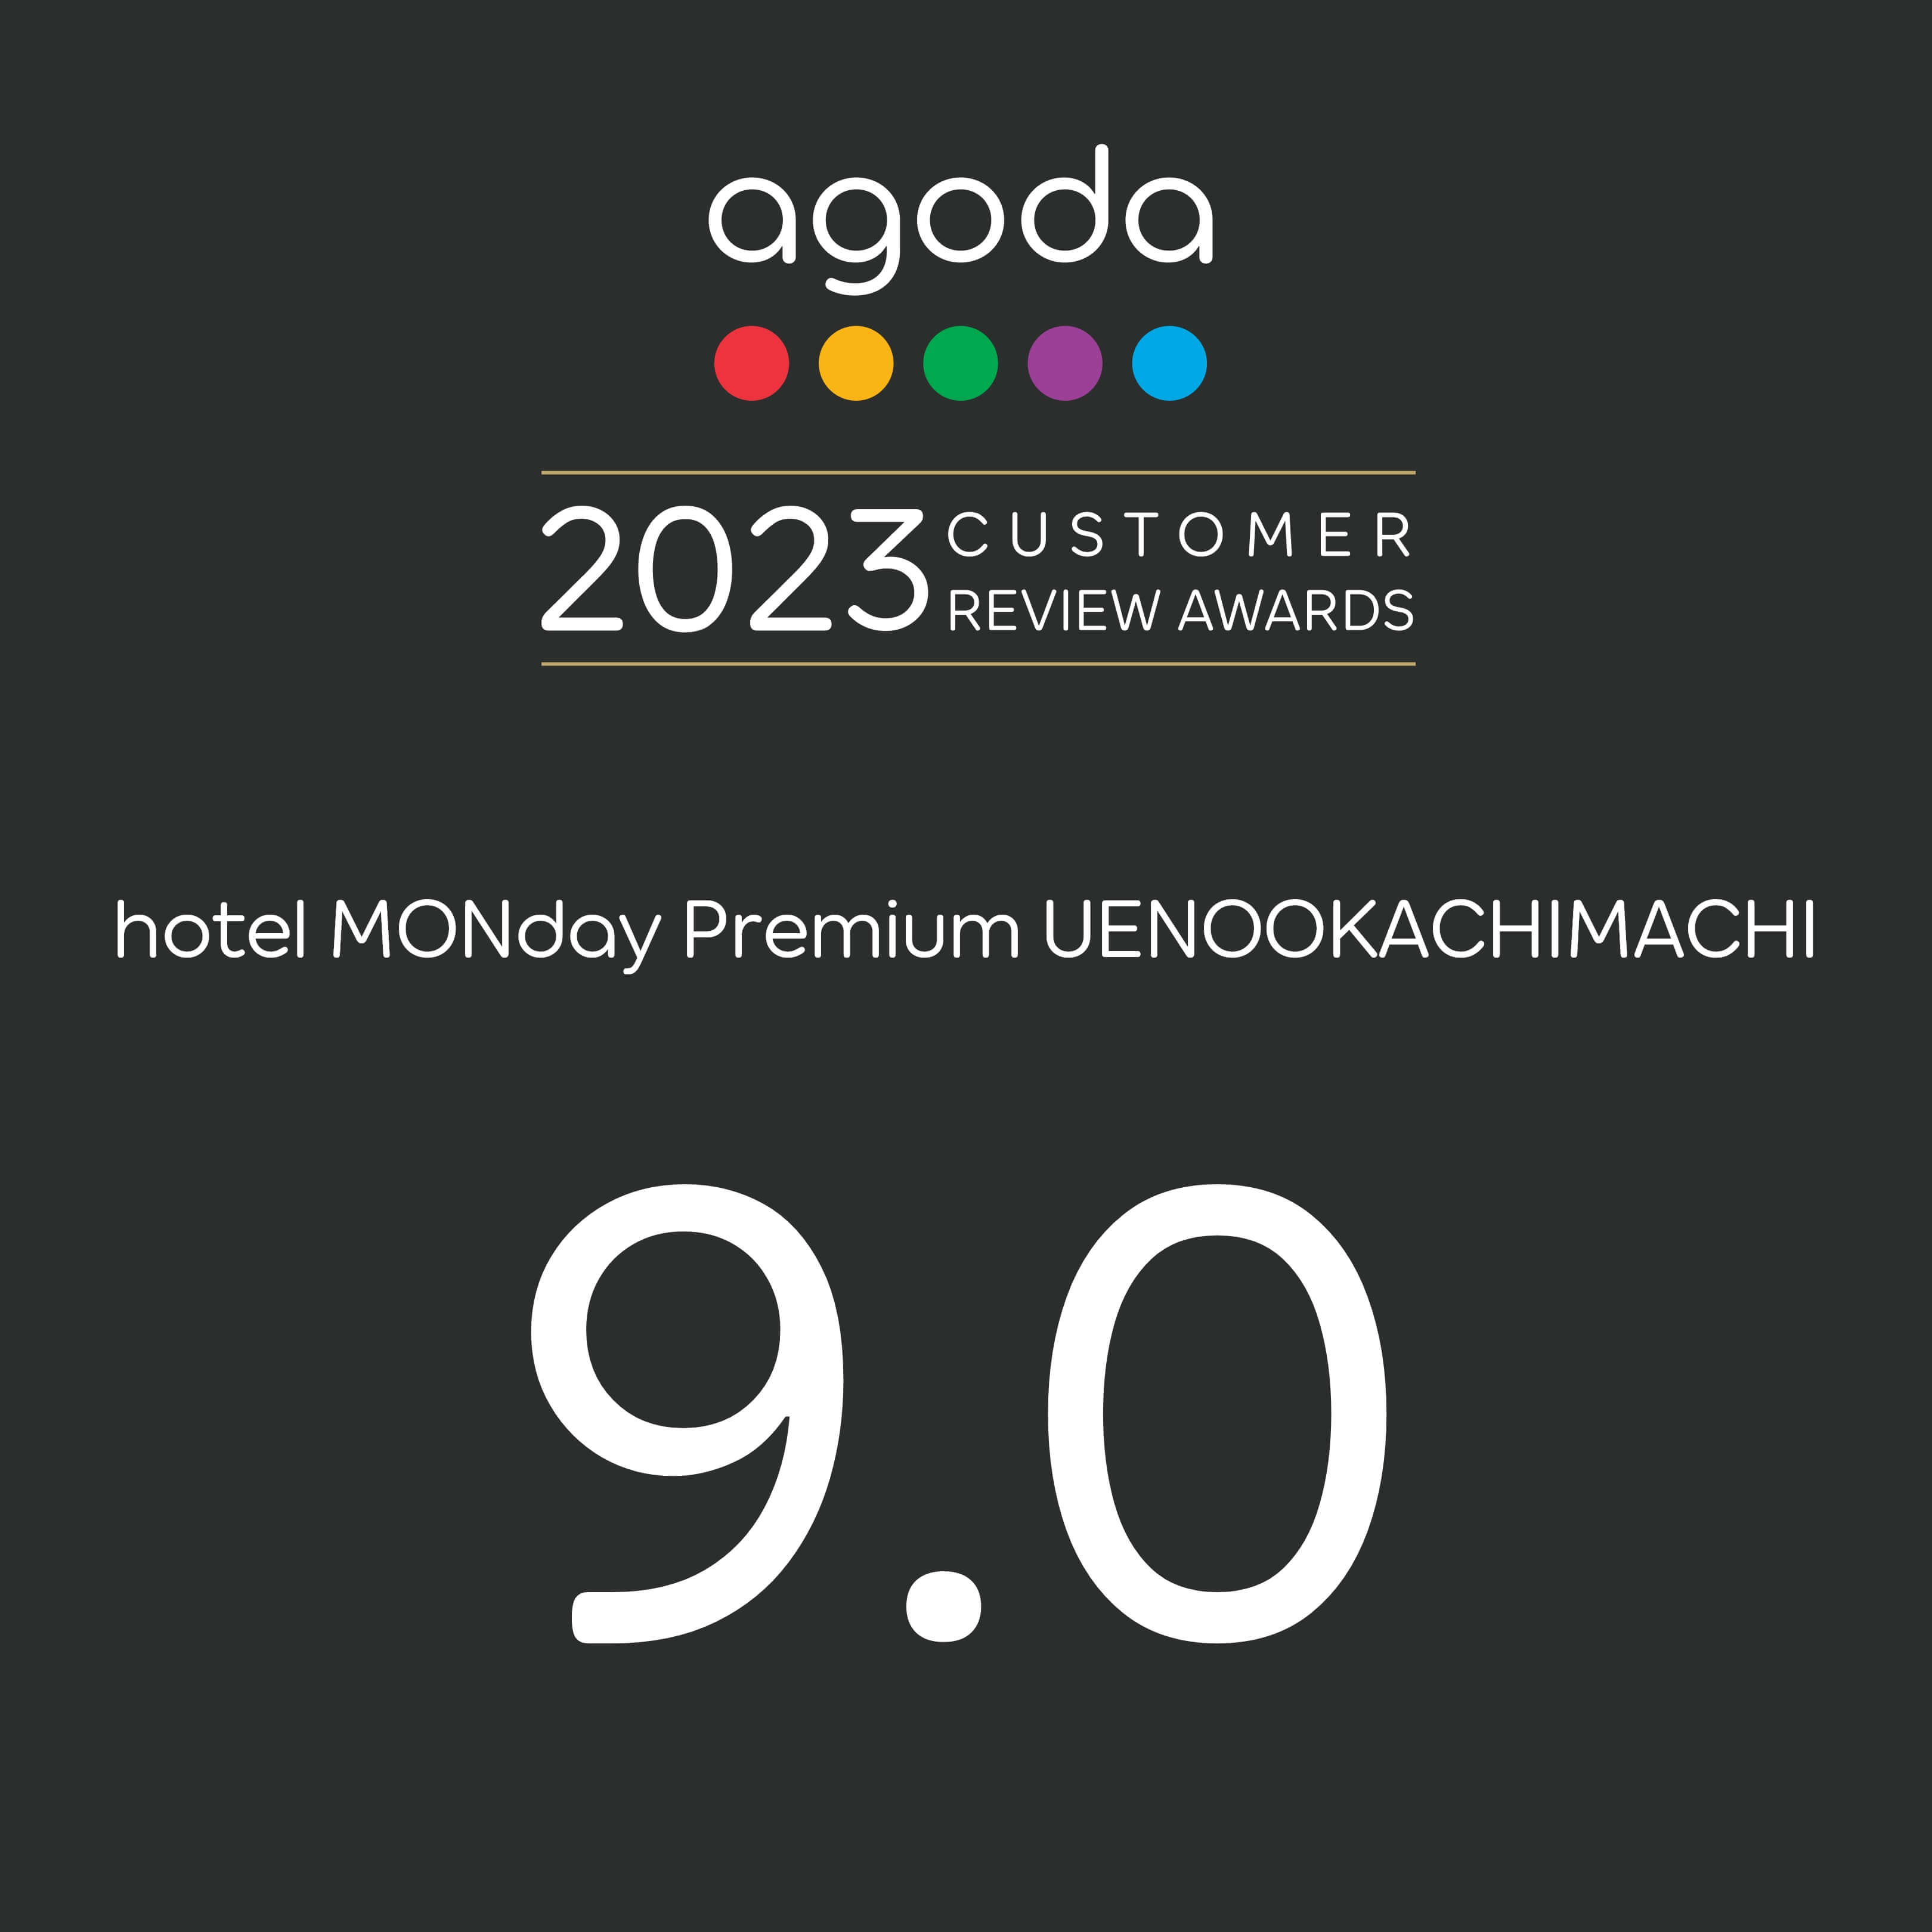 agoda 2023 CUSTOMER REVIEW AWARD hotel MONday Premium UENO-OKACHIMACHI